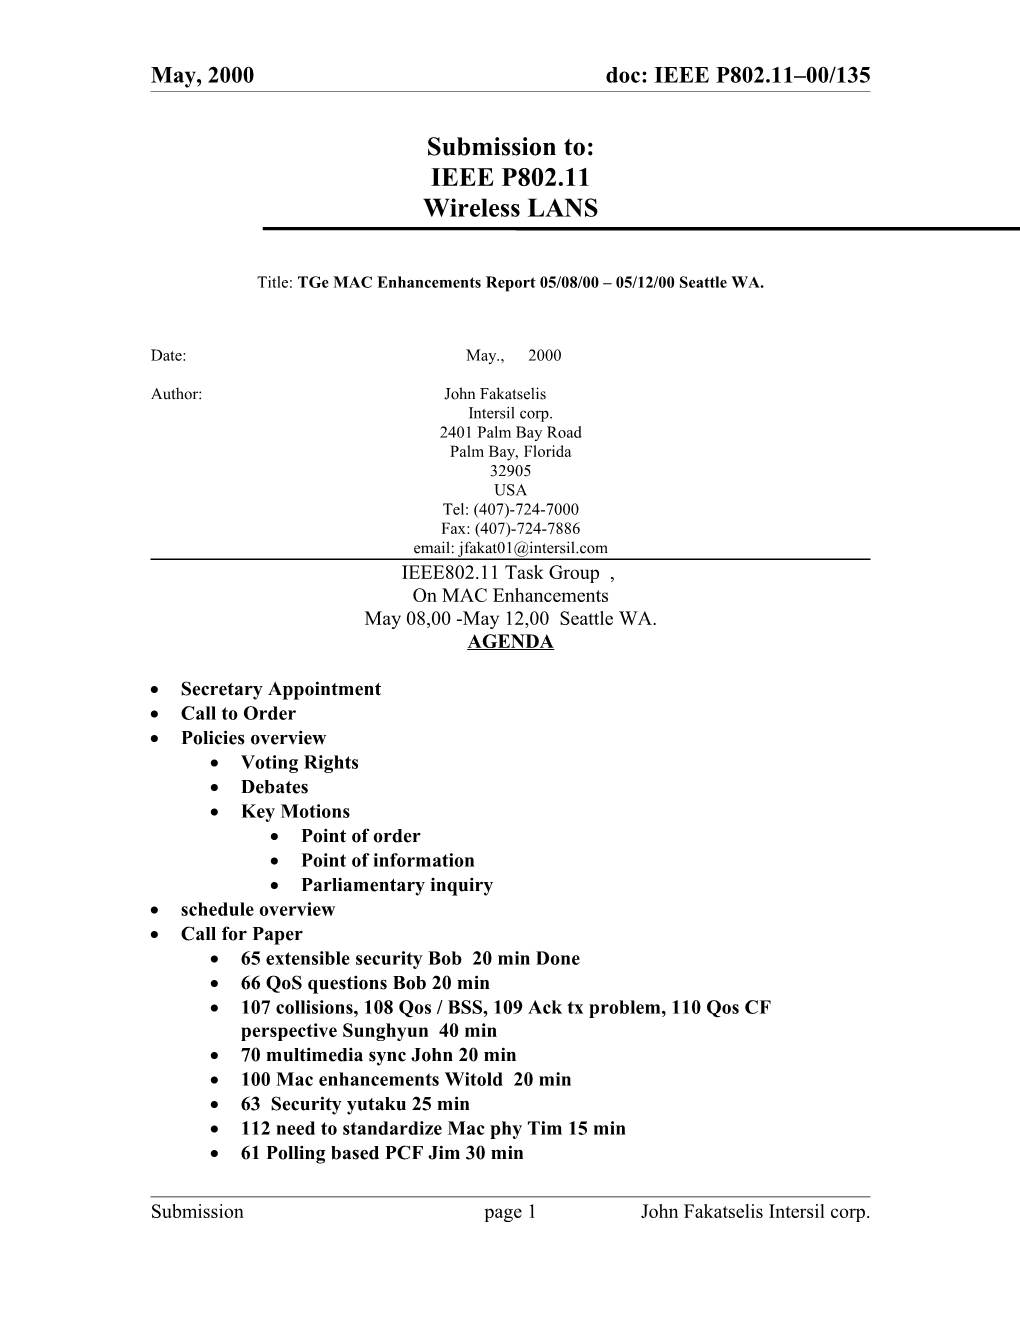 Title: Tge MAC Enhancements Report 05/08/00 05/12/00 Seattle WA